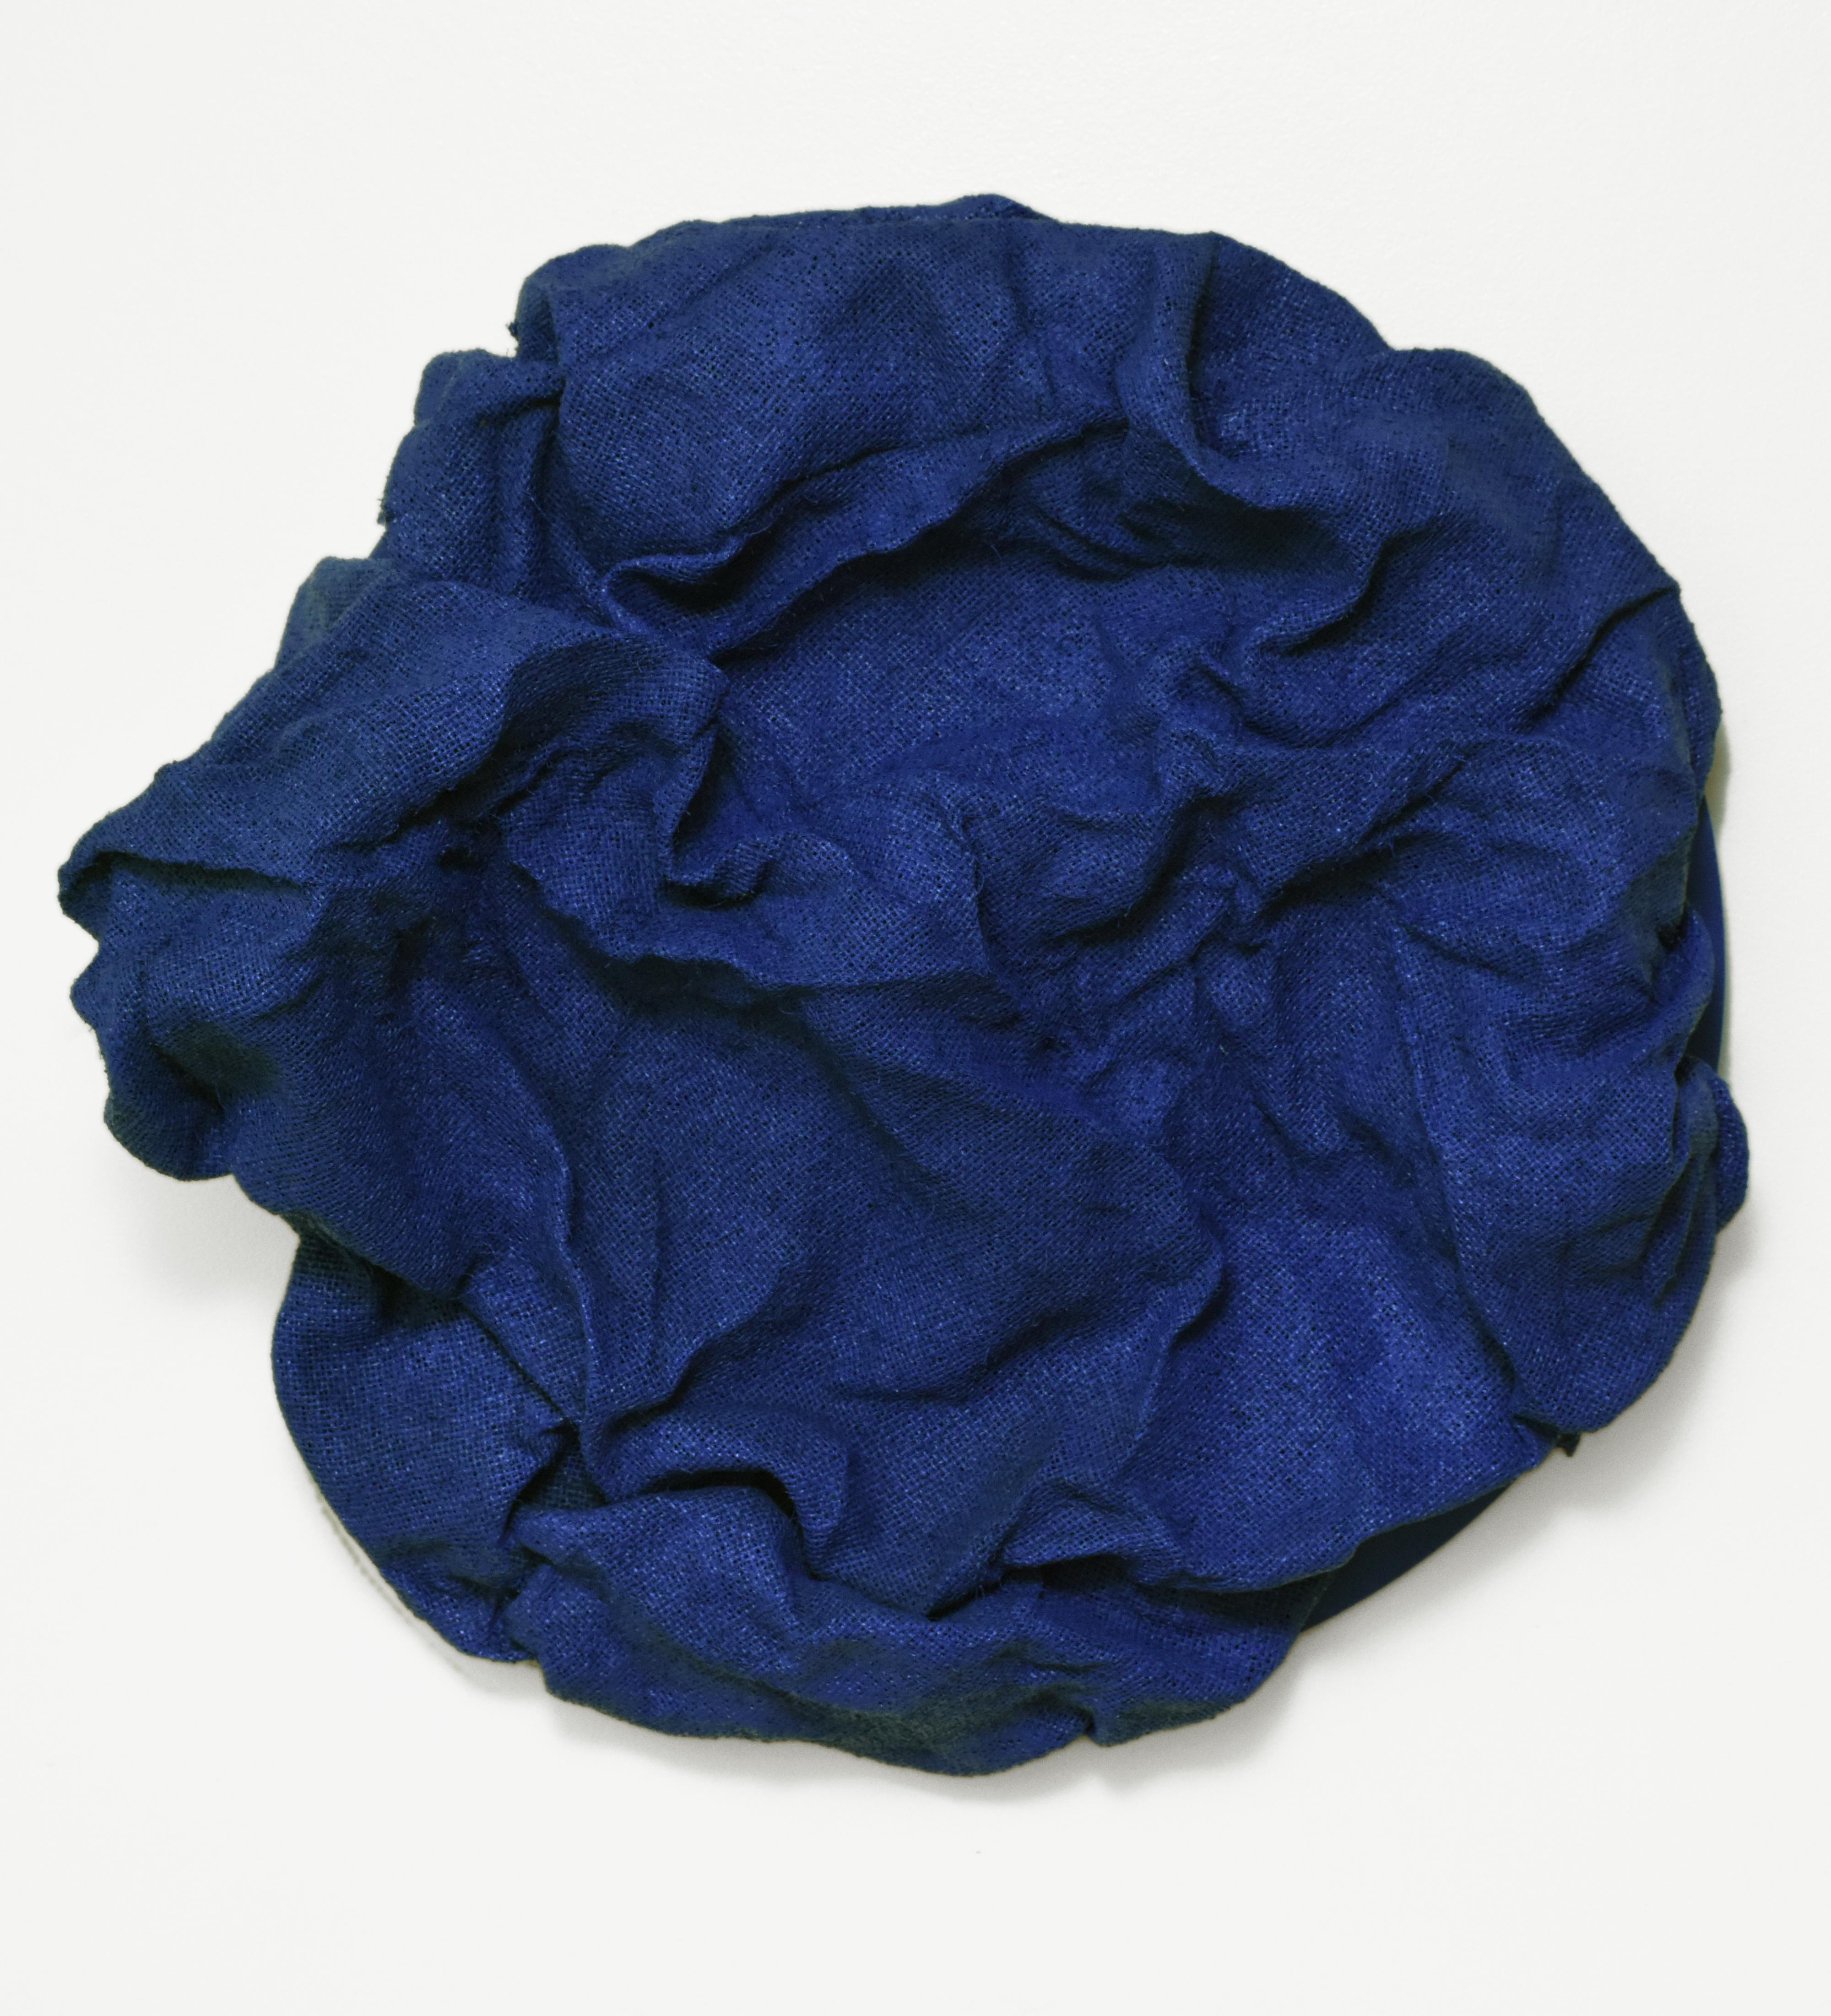 "Iris Blue Folds" Sculpture murale tissu, monochrome, bleu marine, Klein